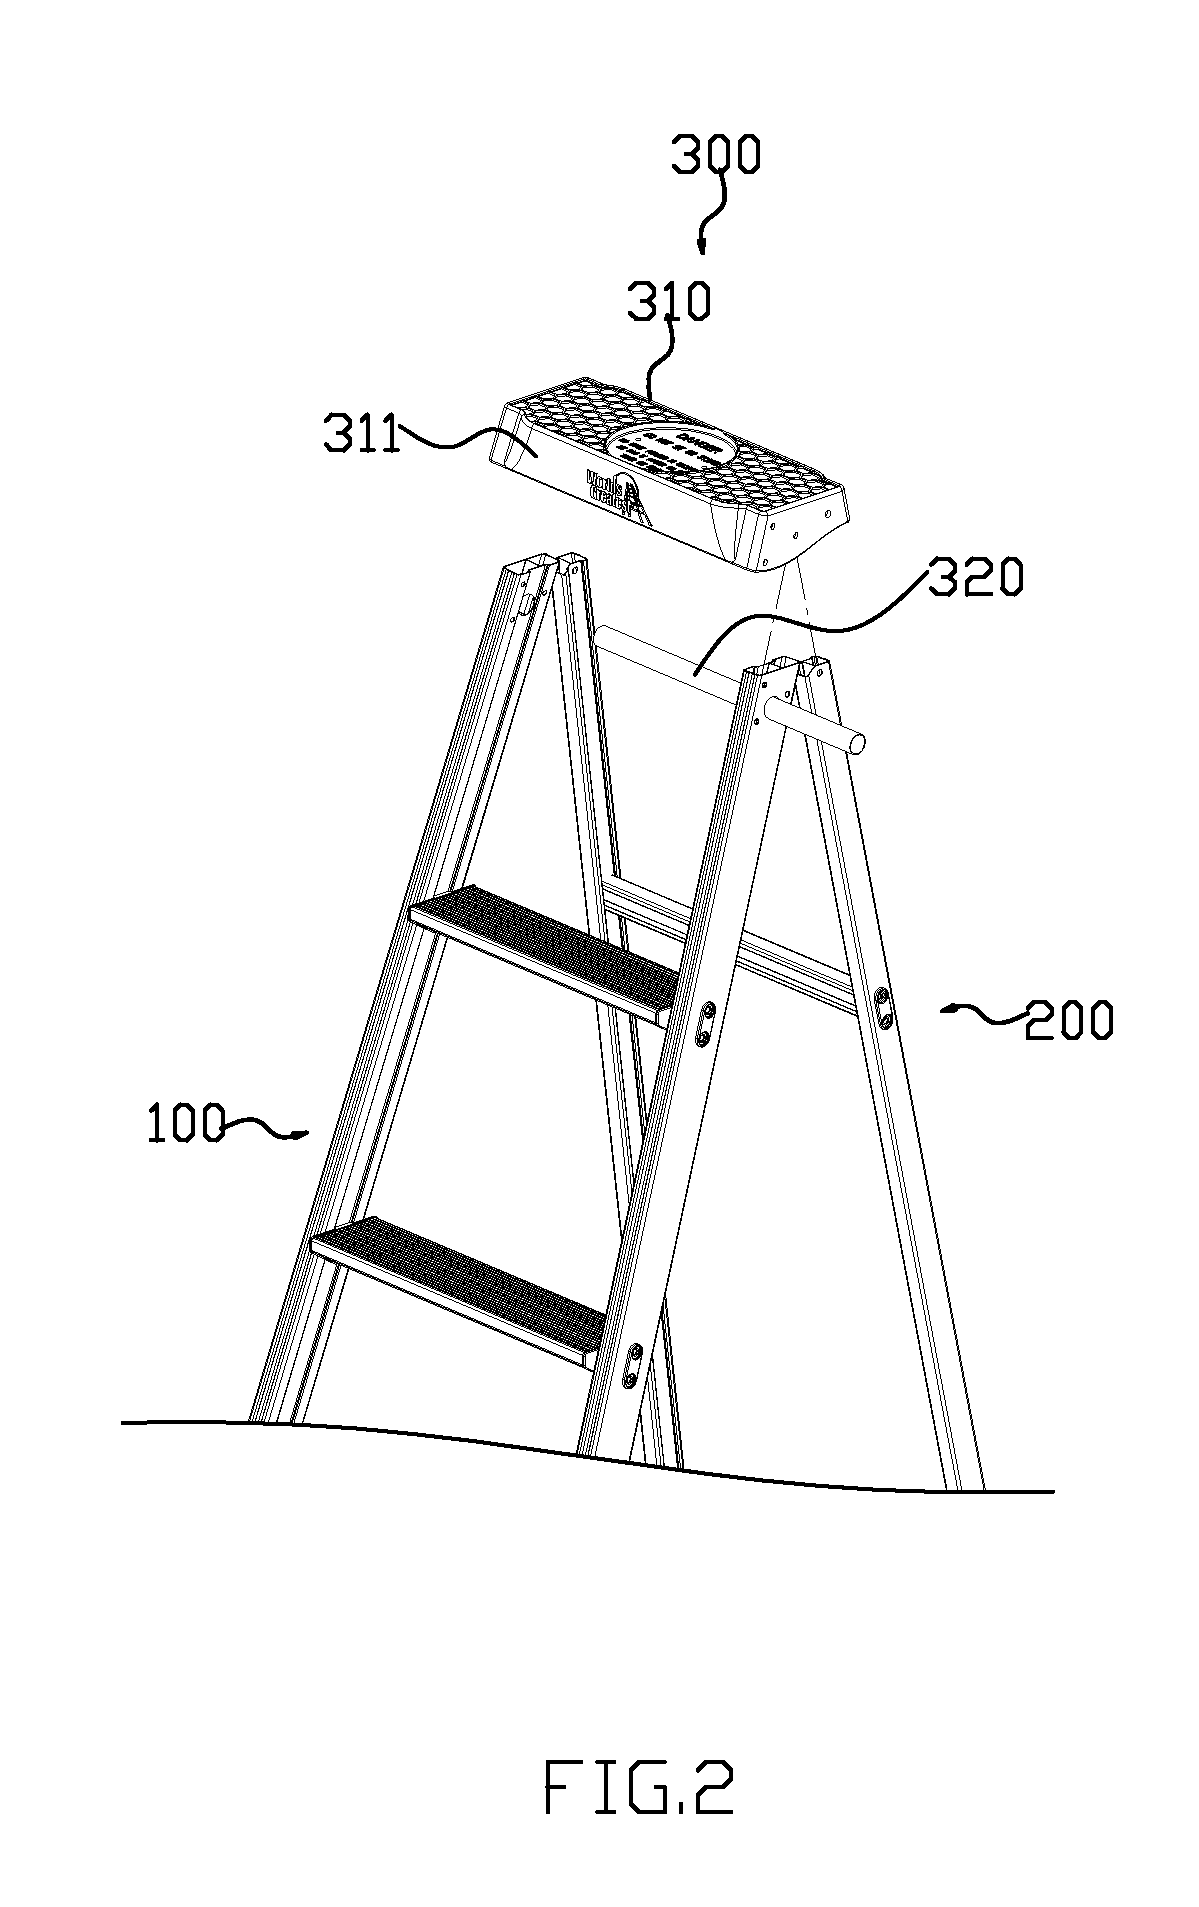 Lambdoidal ladder